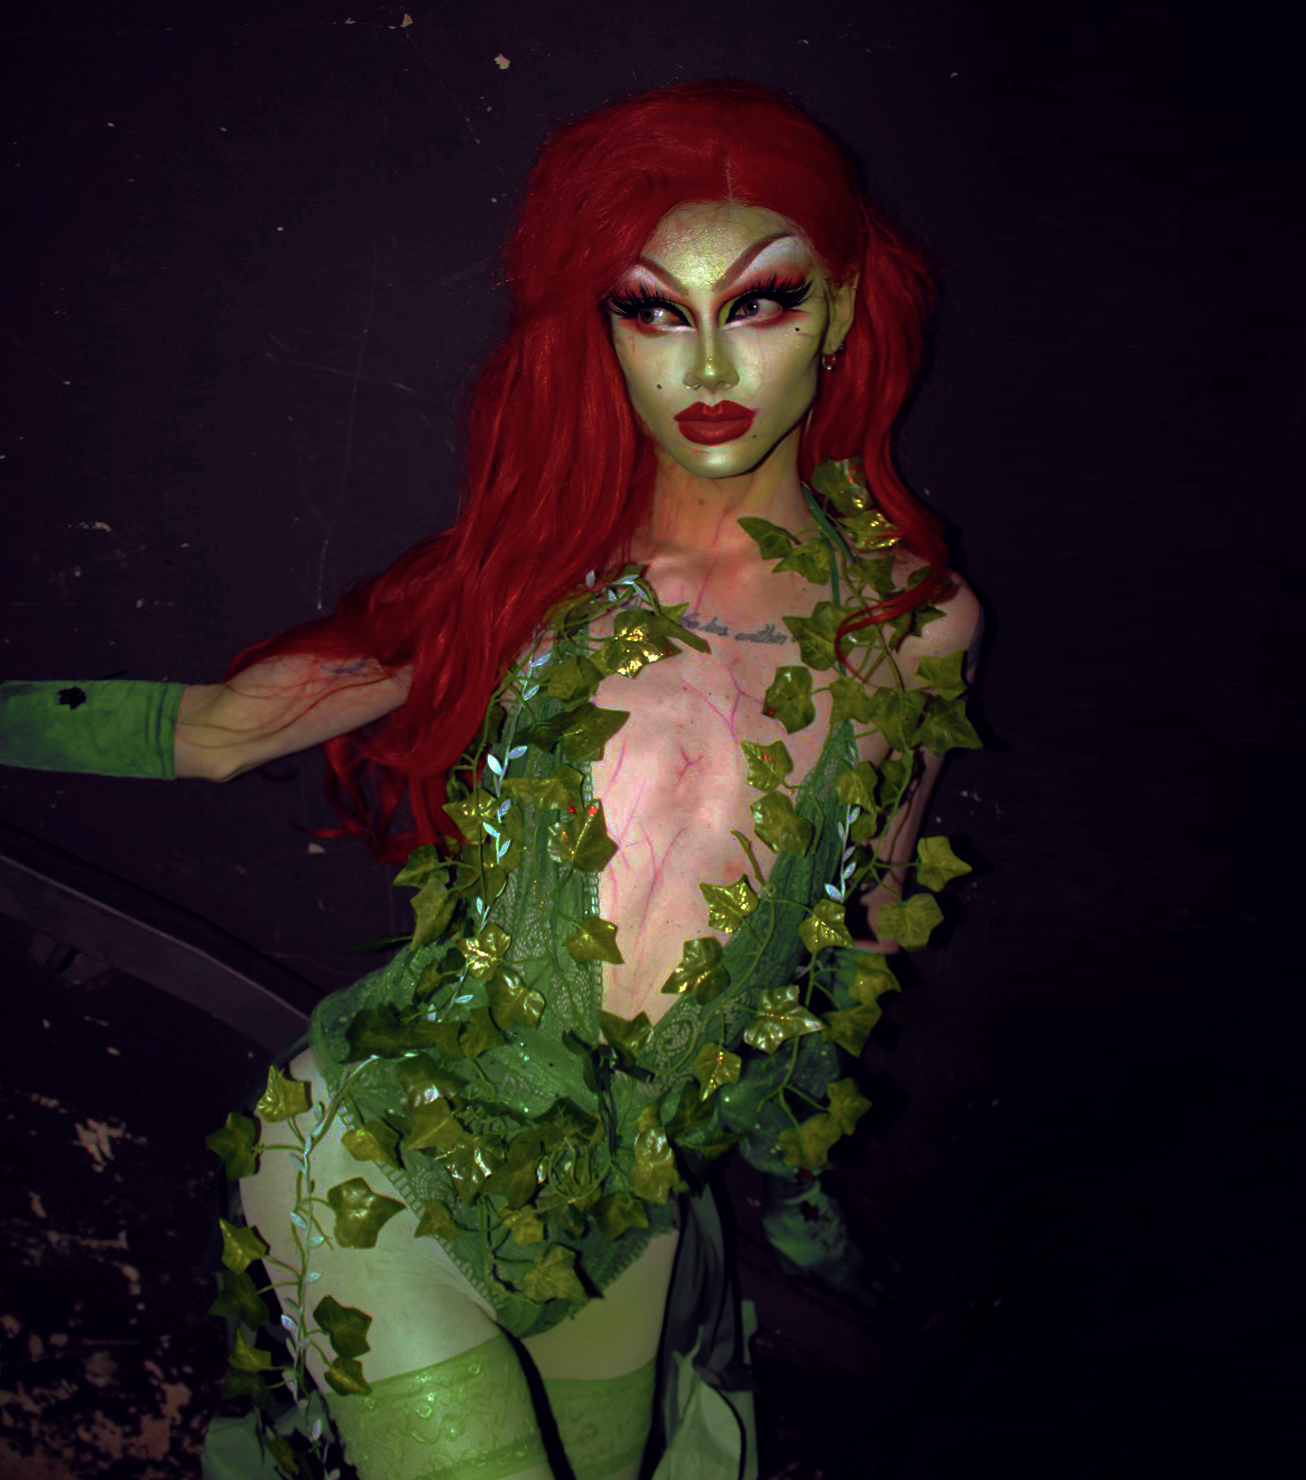 Poison Ivy Bodypaint by mcroft07 on DeviantArt